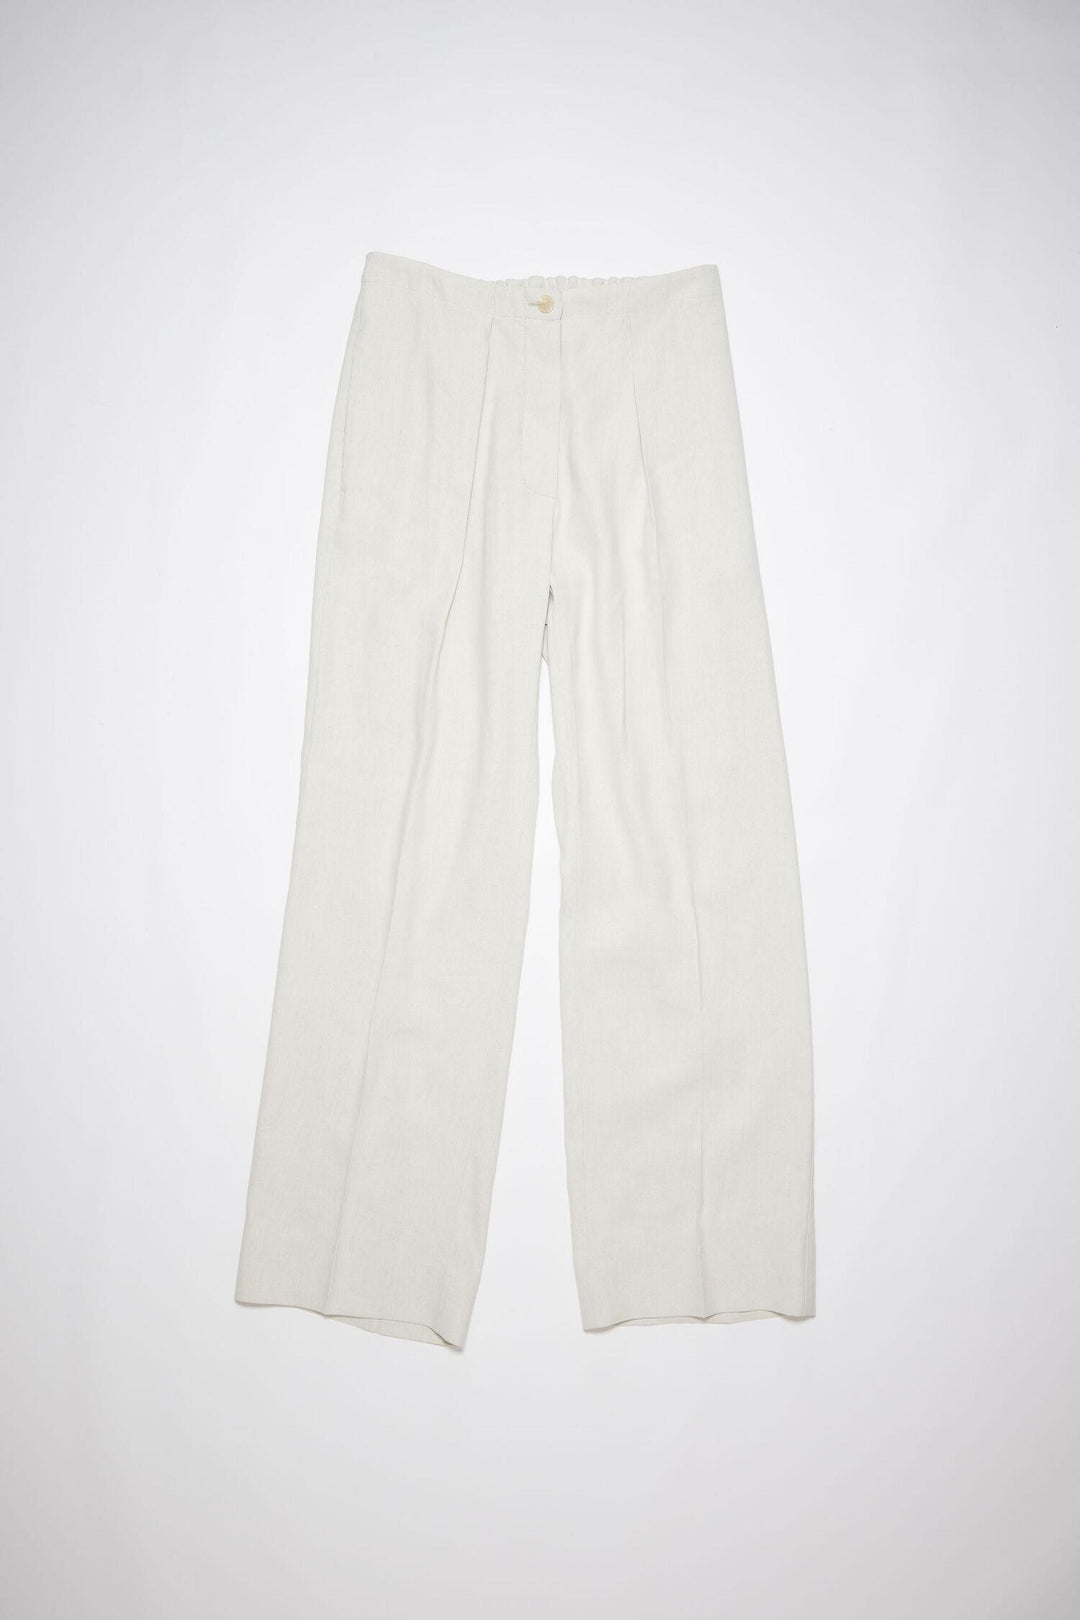 ACNE STUDIOS - Linen Blend Trousers - Cream White - Dale